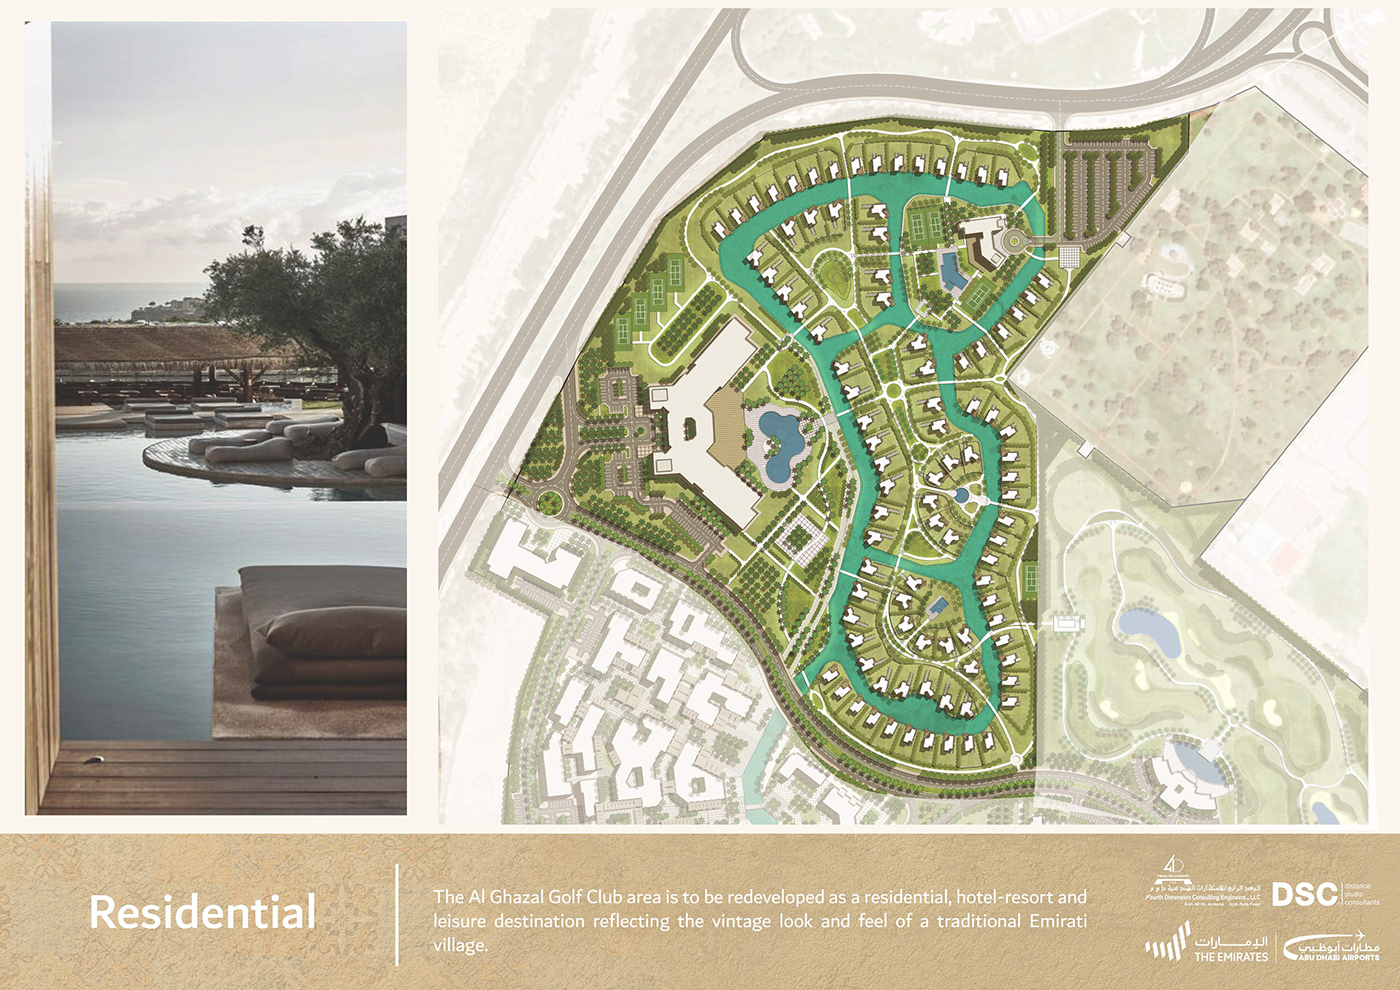 entrtainment Landscape Architecture  Master Plan Mixed Use Development resort retails TRADITIONAL SOUQ Urban Design urban planning